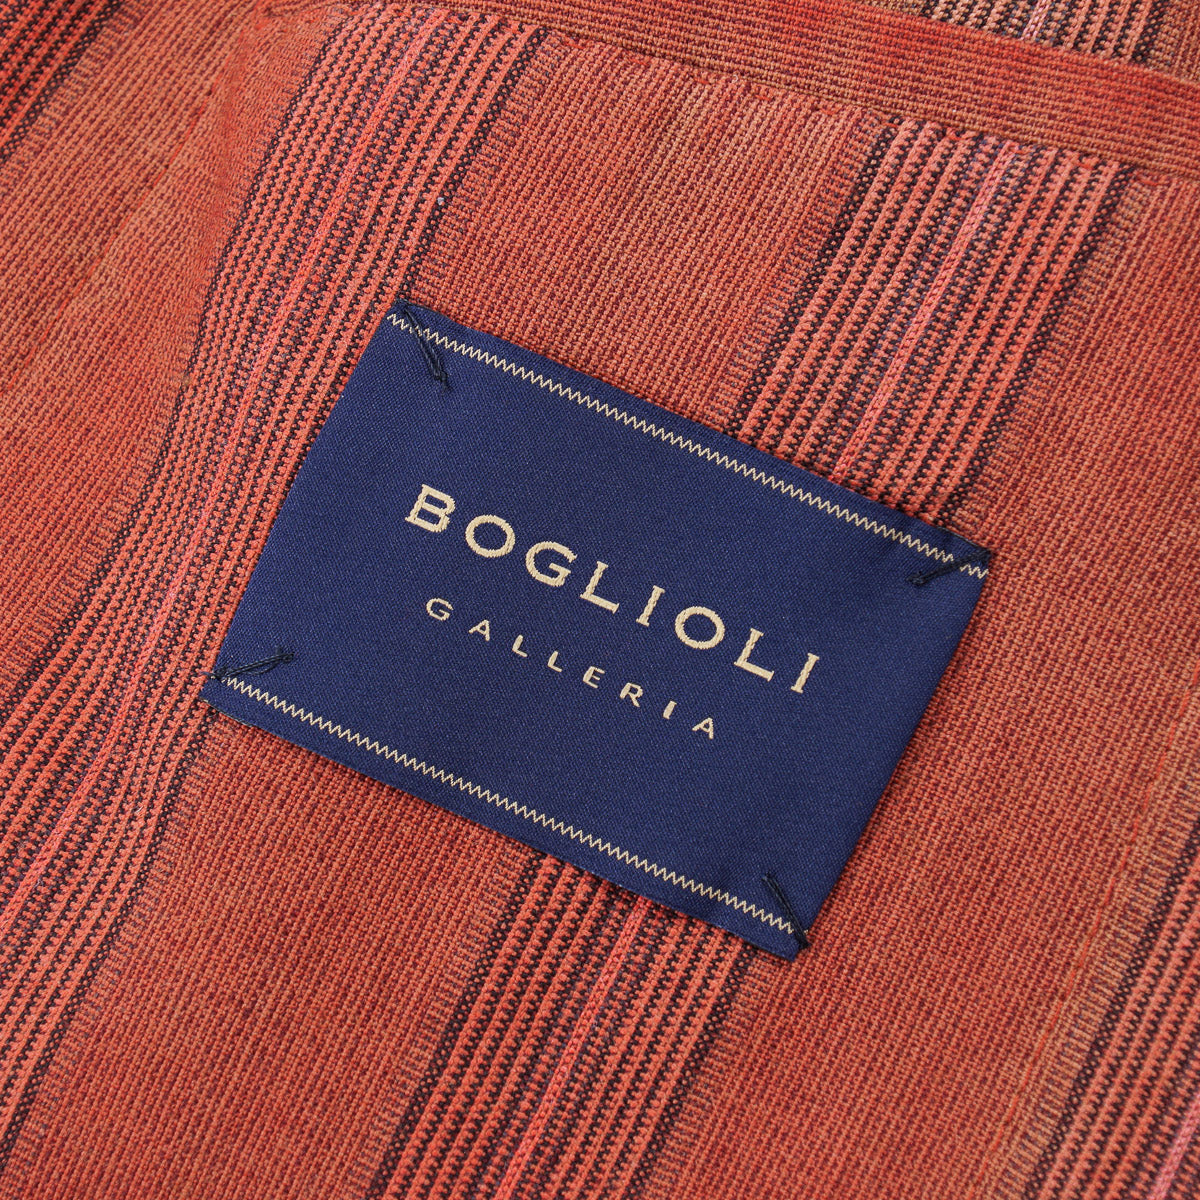 Boglioli Soft-Constructed Wool Sport Coat - Top Shelf Apparel